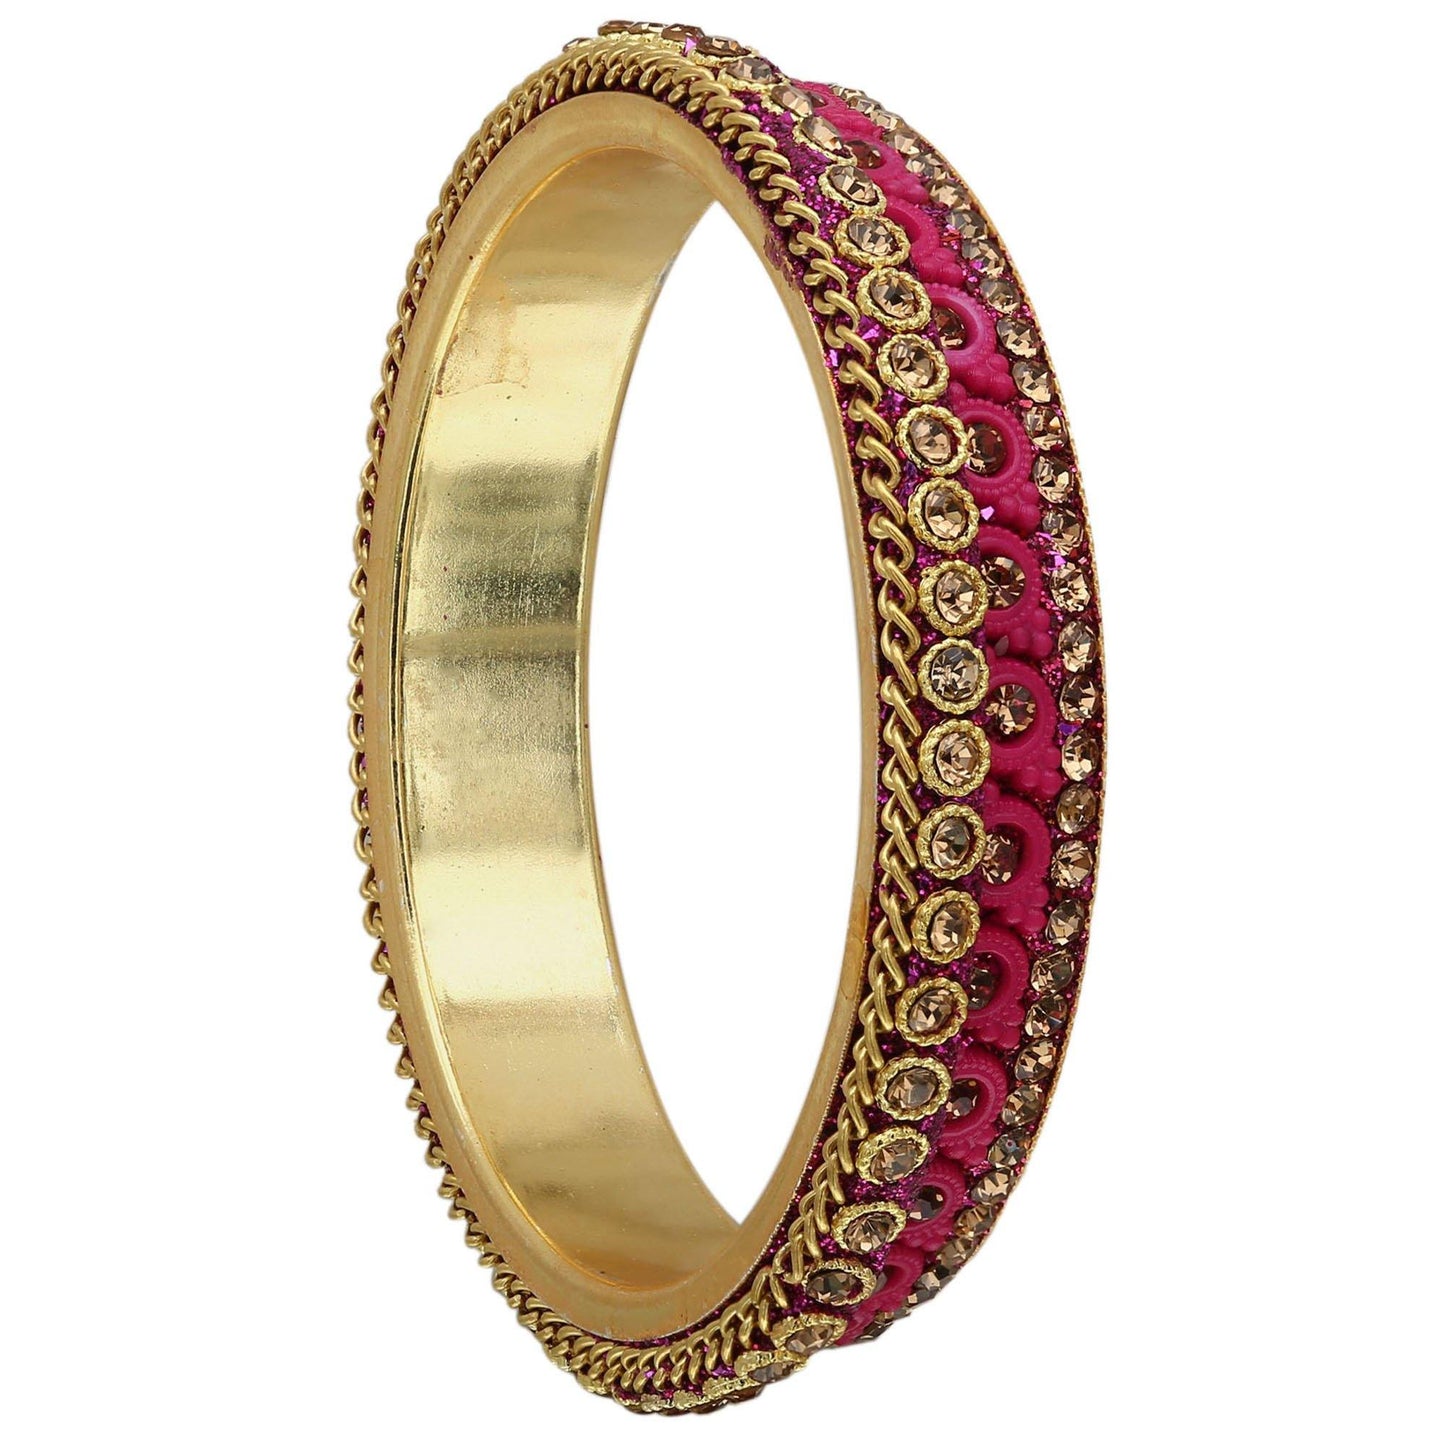 sukriti rajasthani ethnic golden brass kada bangles for women – set of 2